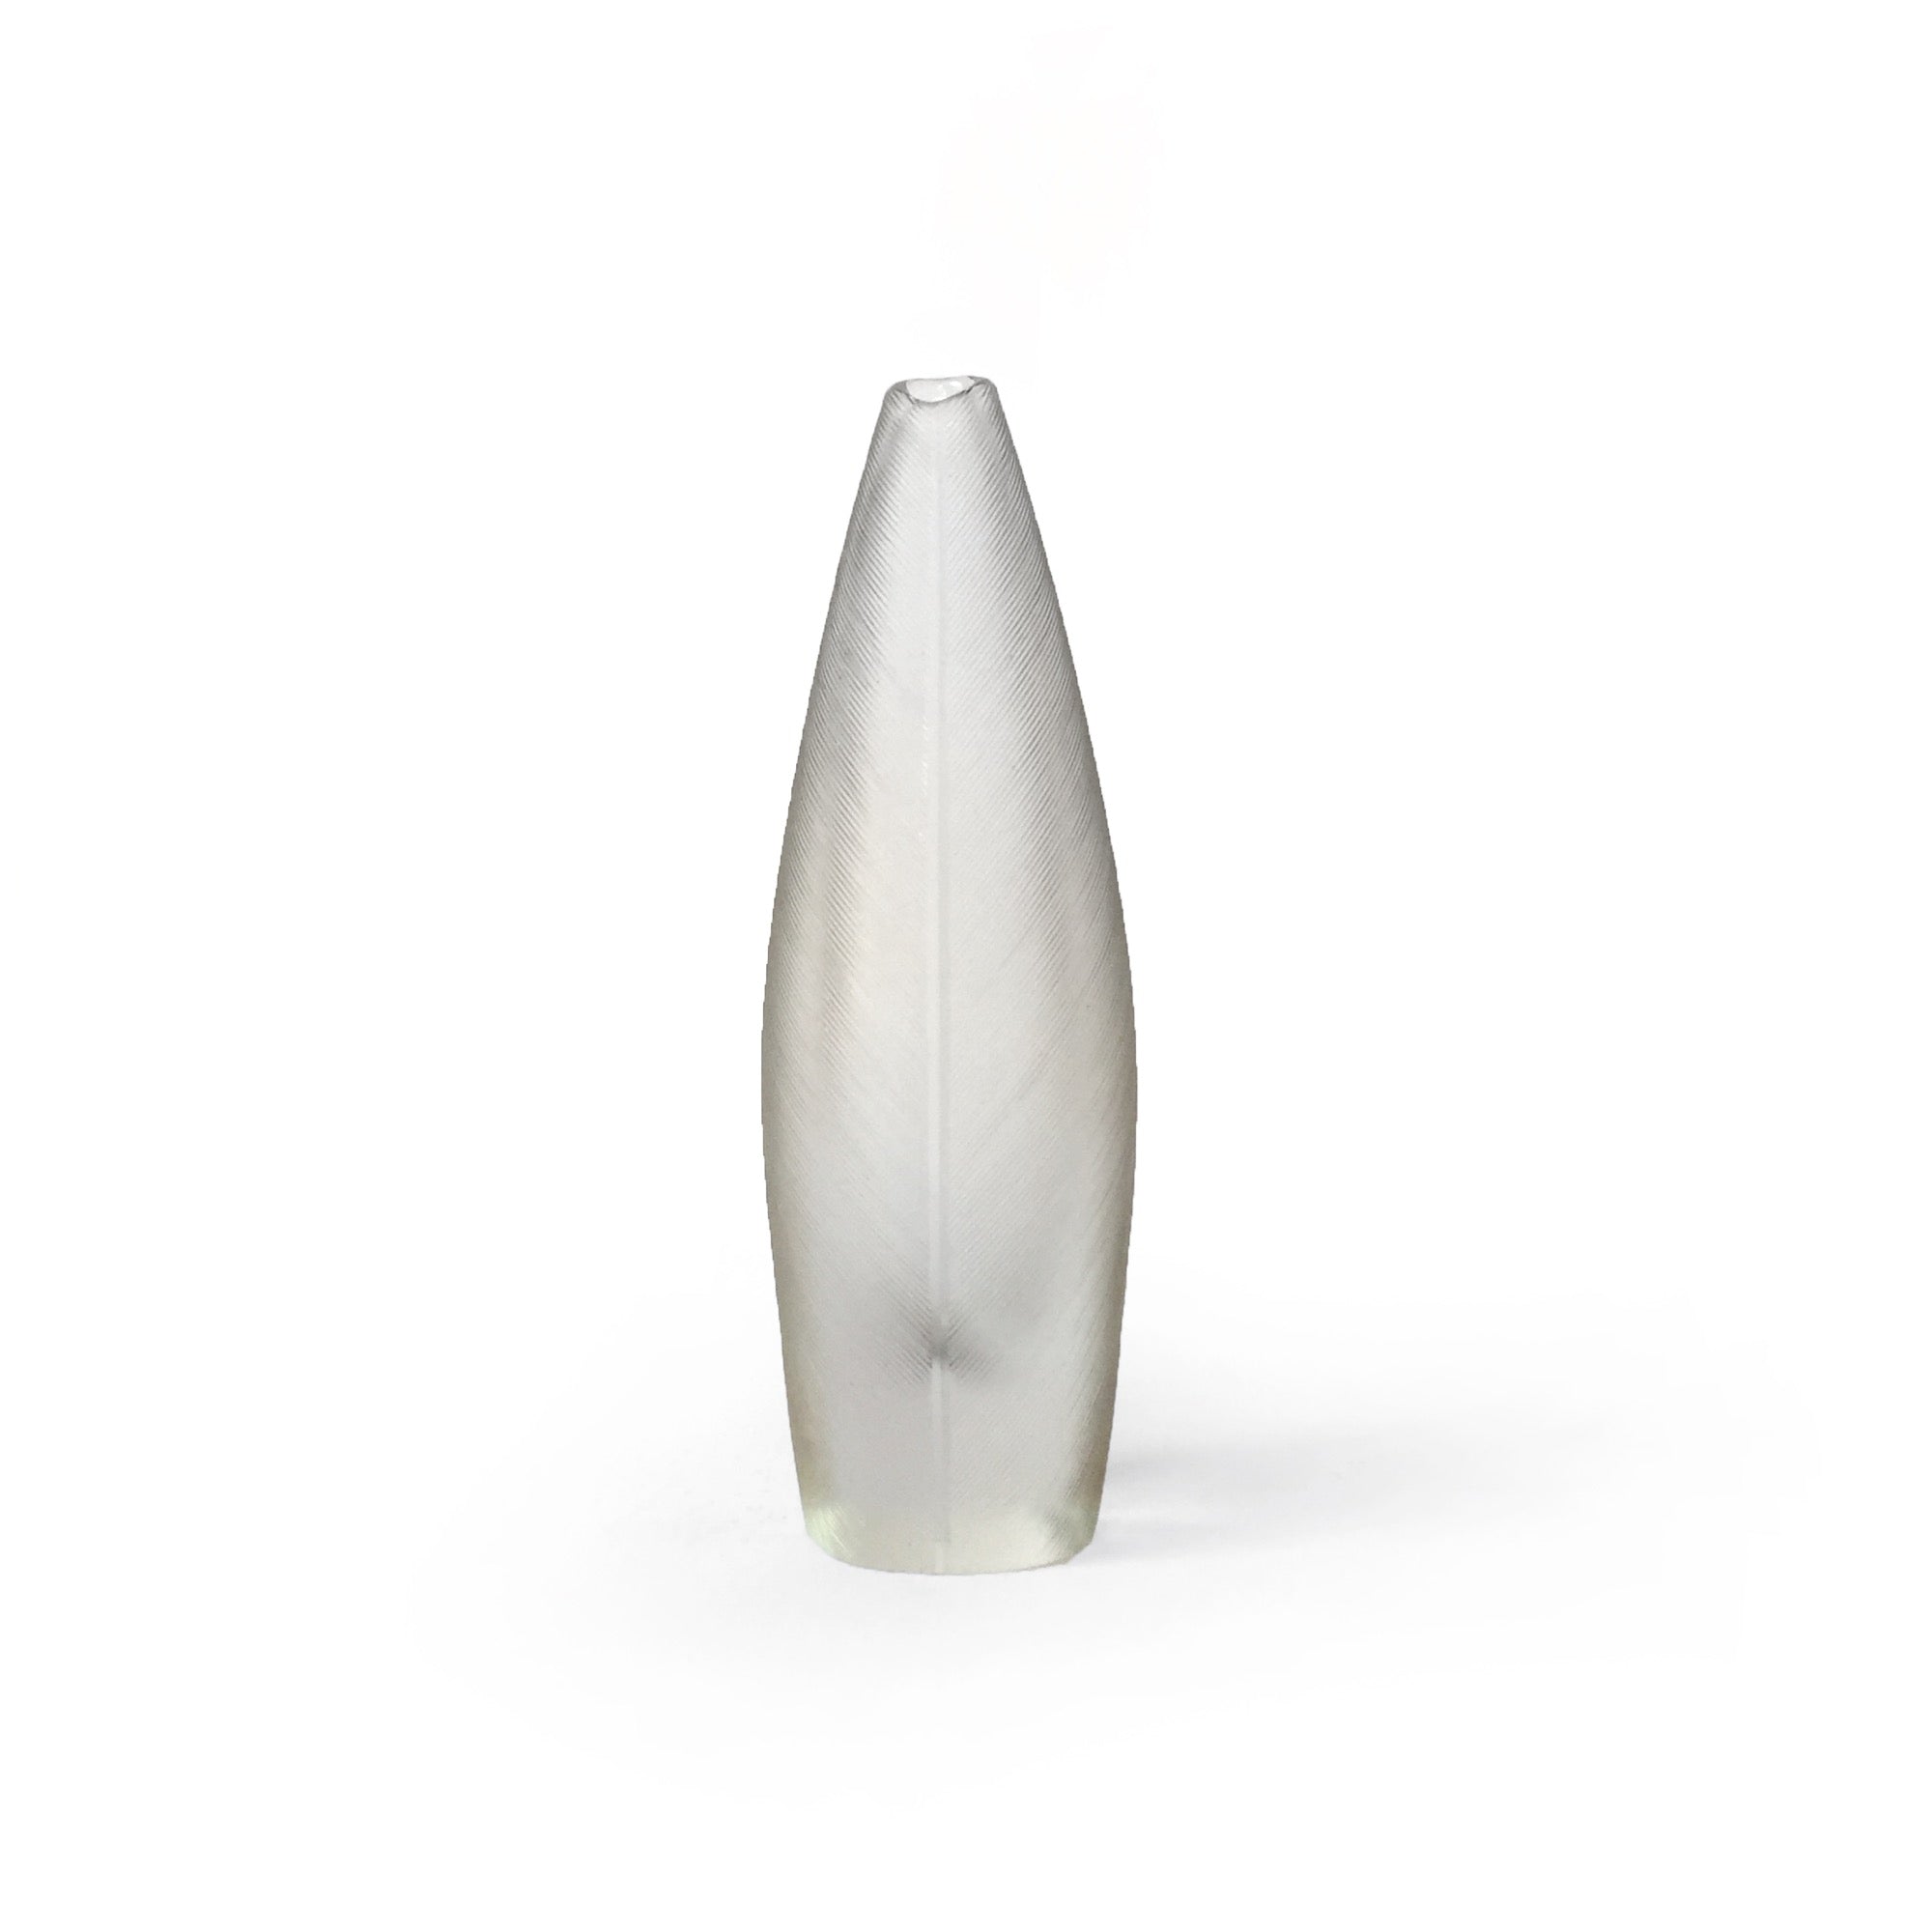 Etched Vase by Tapio Wirkkala for Iittala glassworks